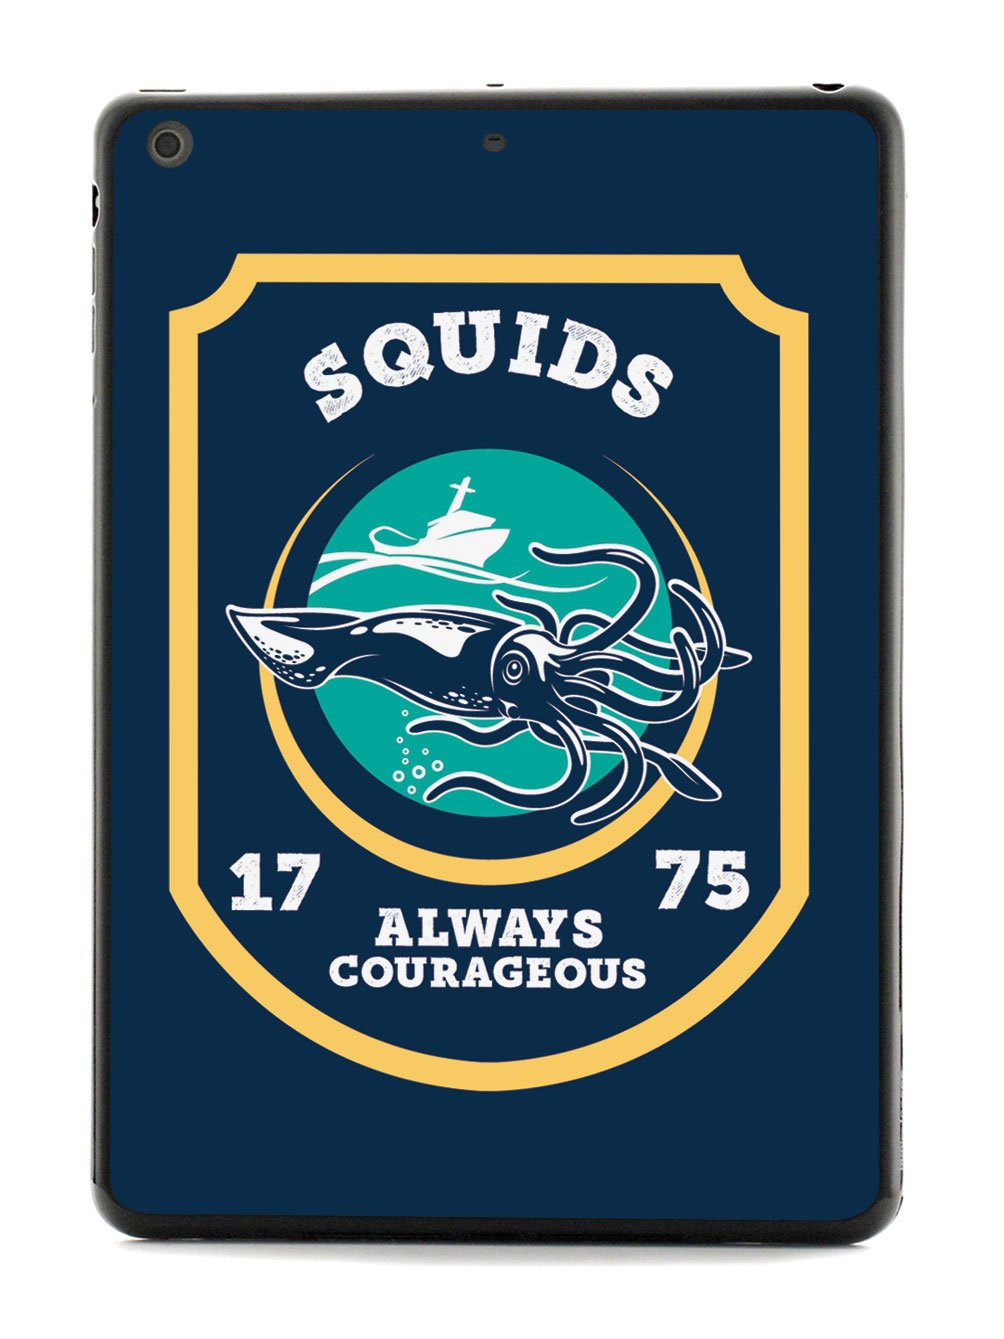 Squids - US Navy Case